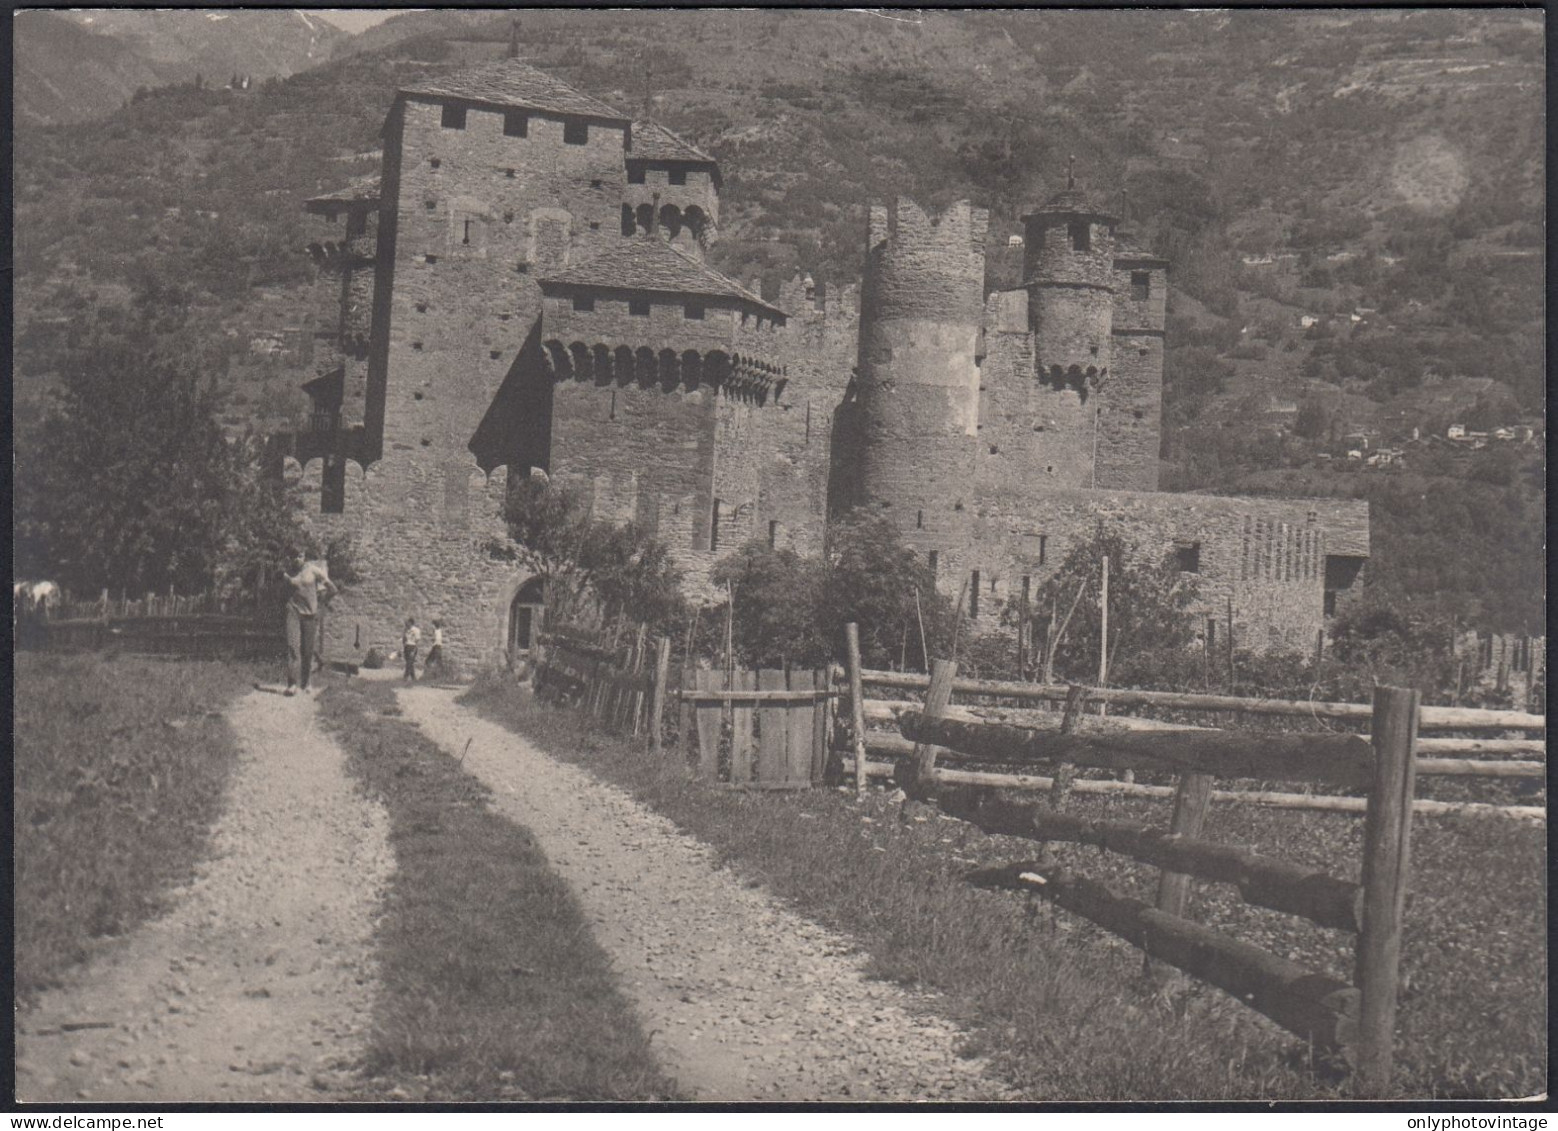 Valle D'Aosta 1960 - Castello Di Fénis - Fotografia Epoca - Vintage Photo - Orte